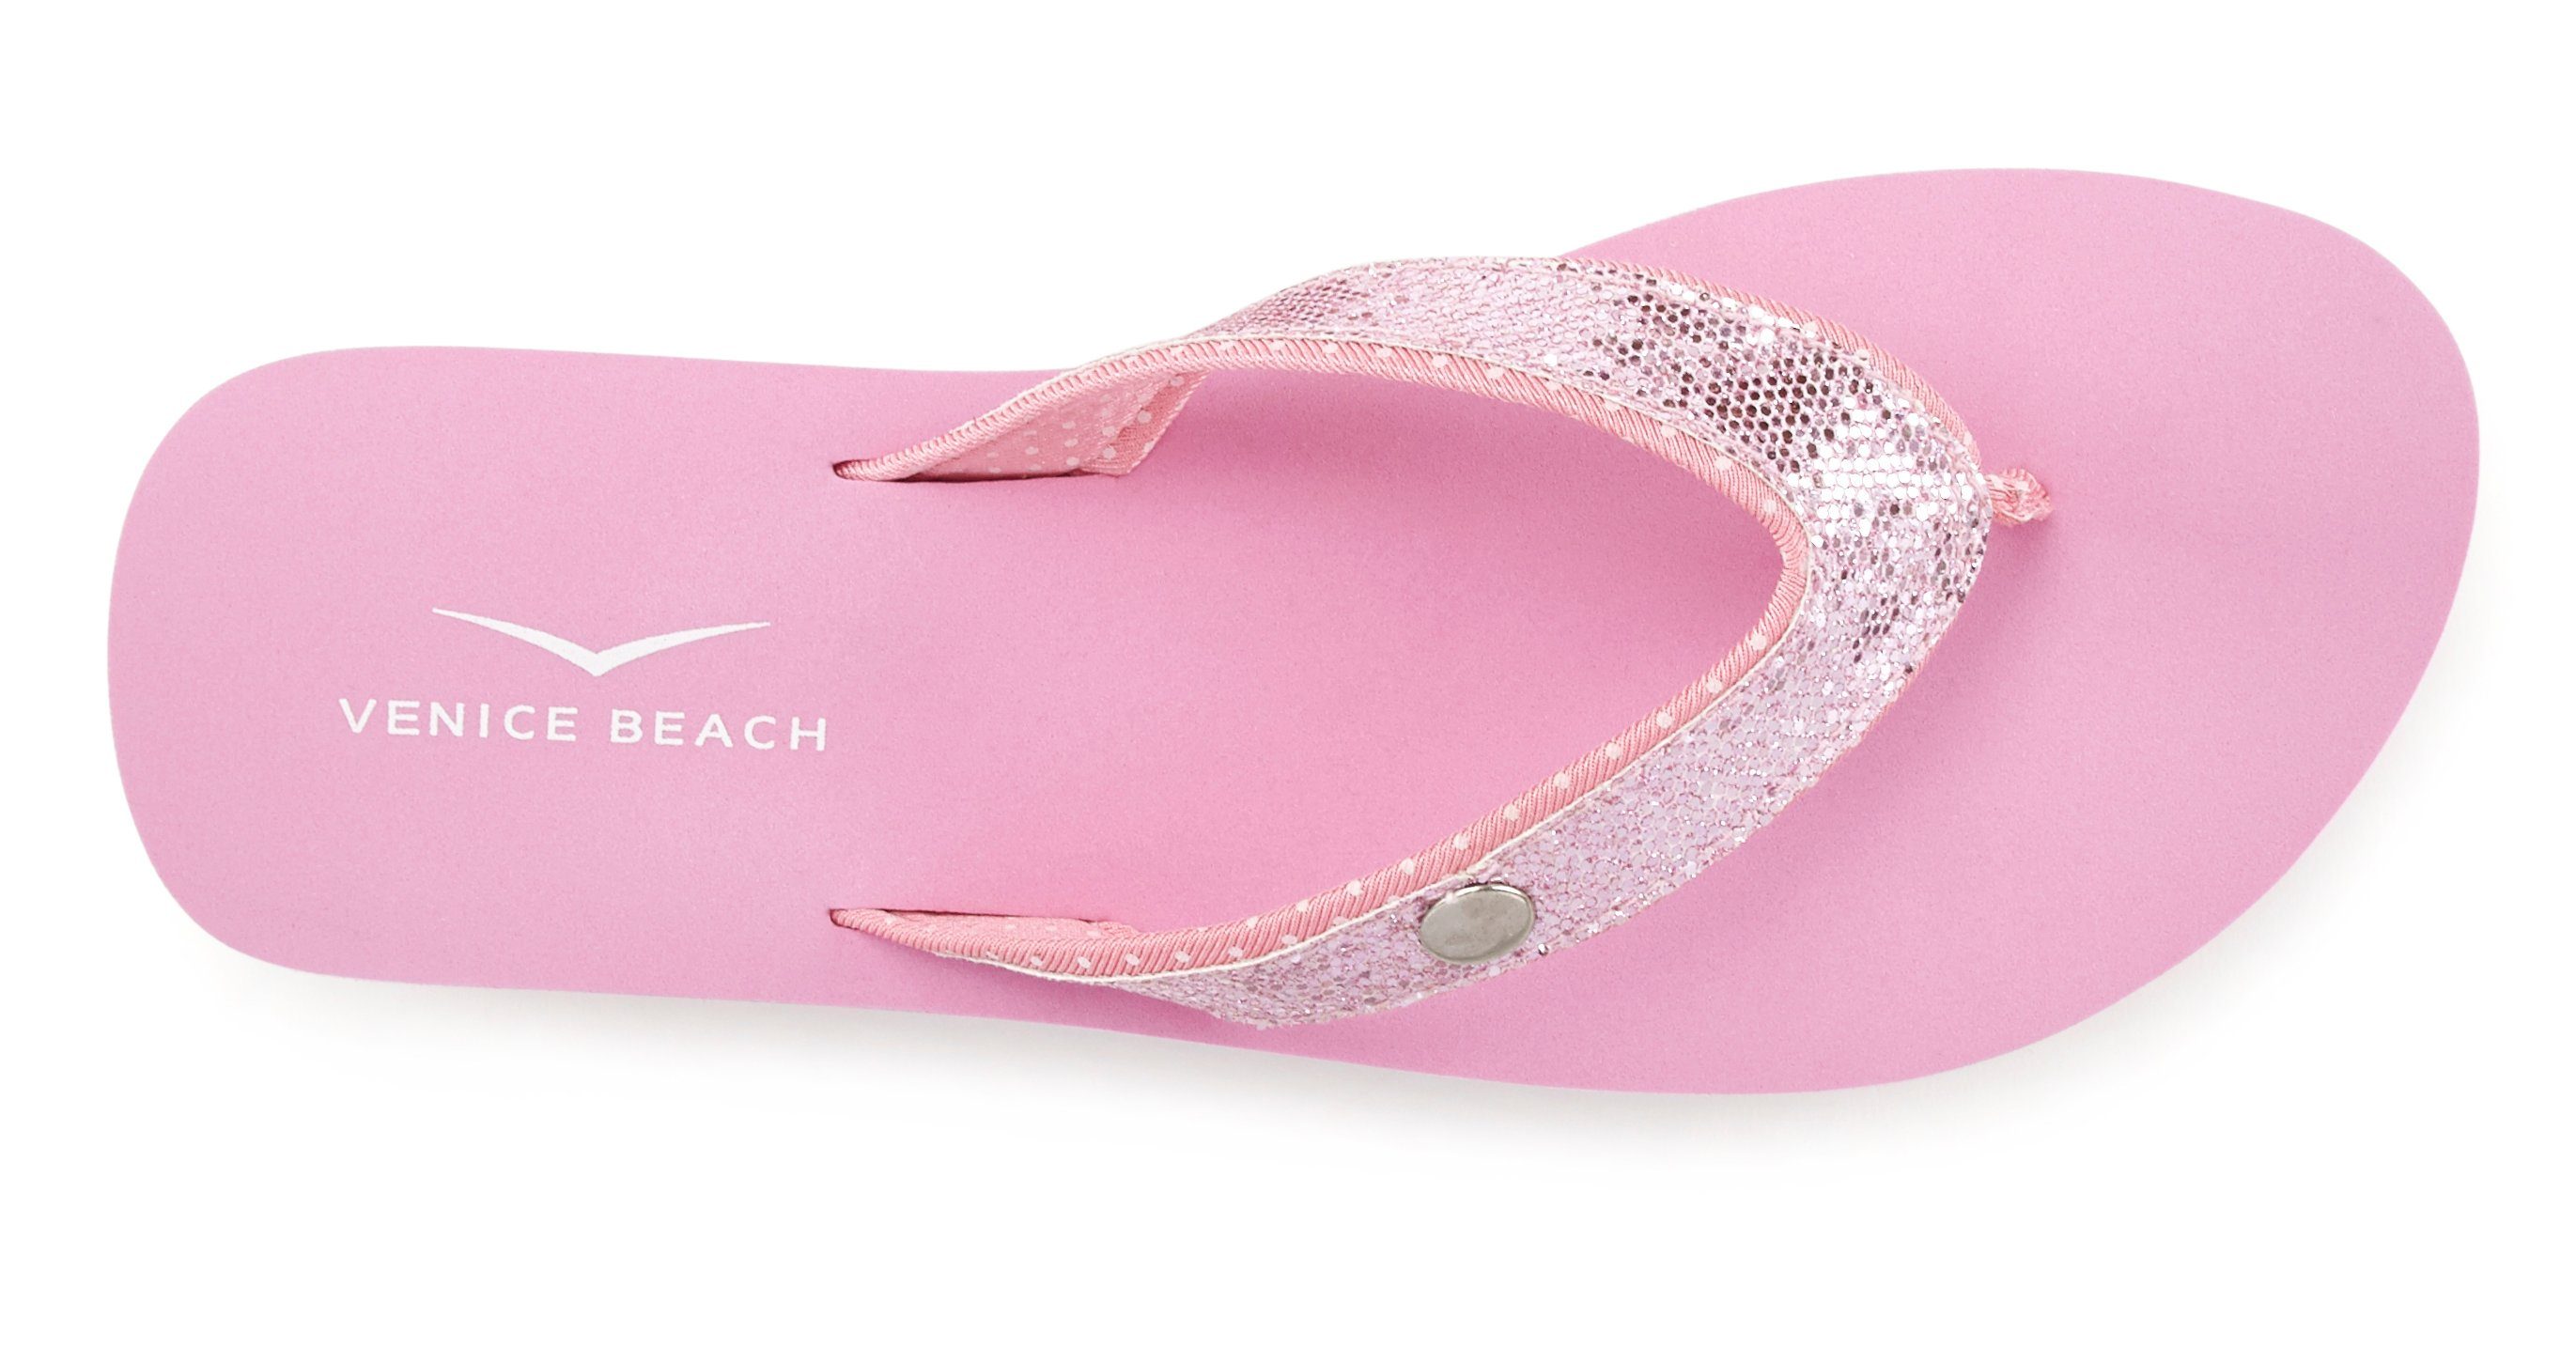 Badezehentrenner Venice VEGAN ultraleicht Glitzerband rosé Beach Sandale, Pantolette, mit Badeschuh